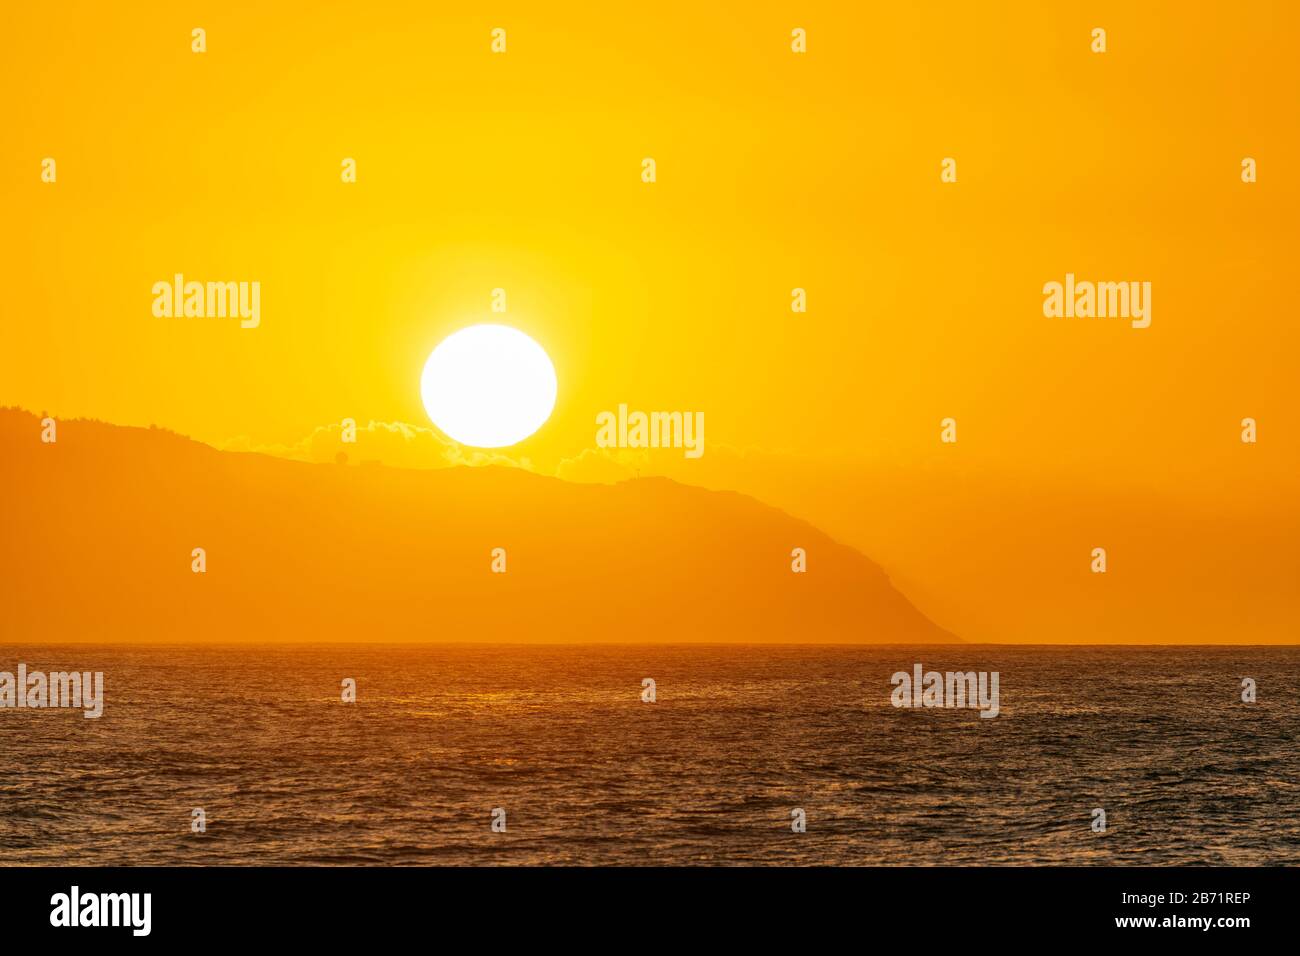 United States of America, Hawaii, Oahu island, North Shore at sunset Stock Photo